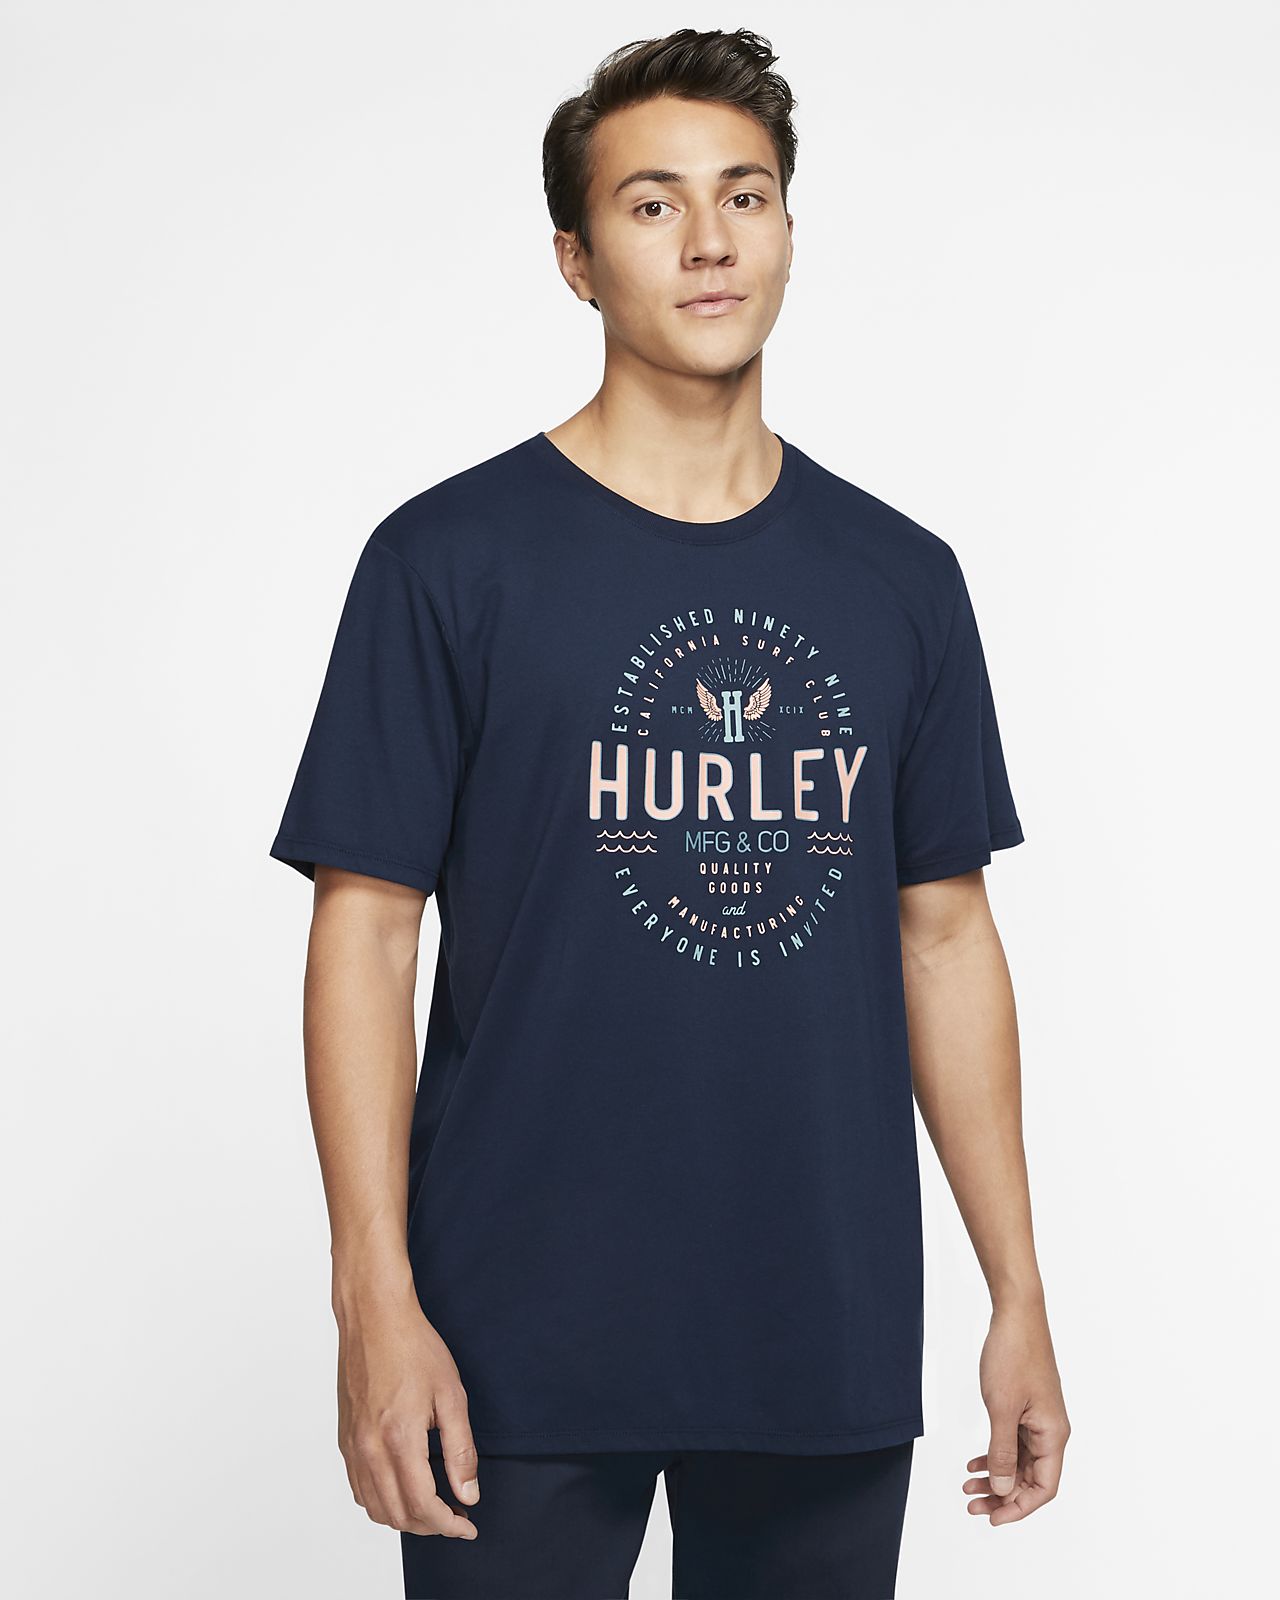 hurley nike dri fit shirts